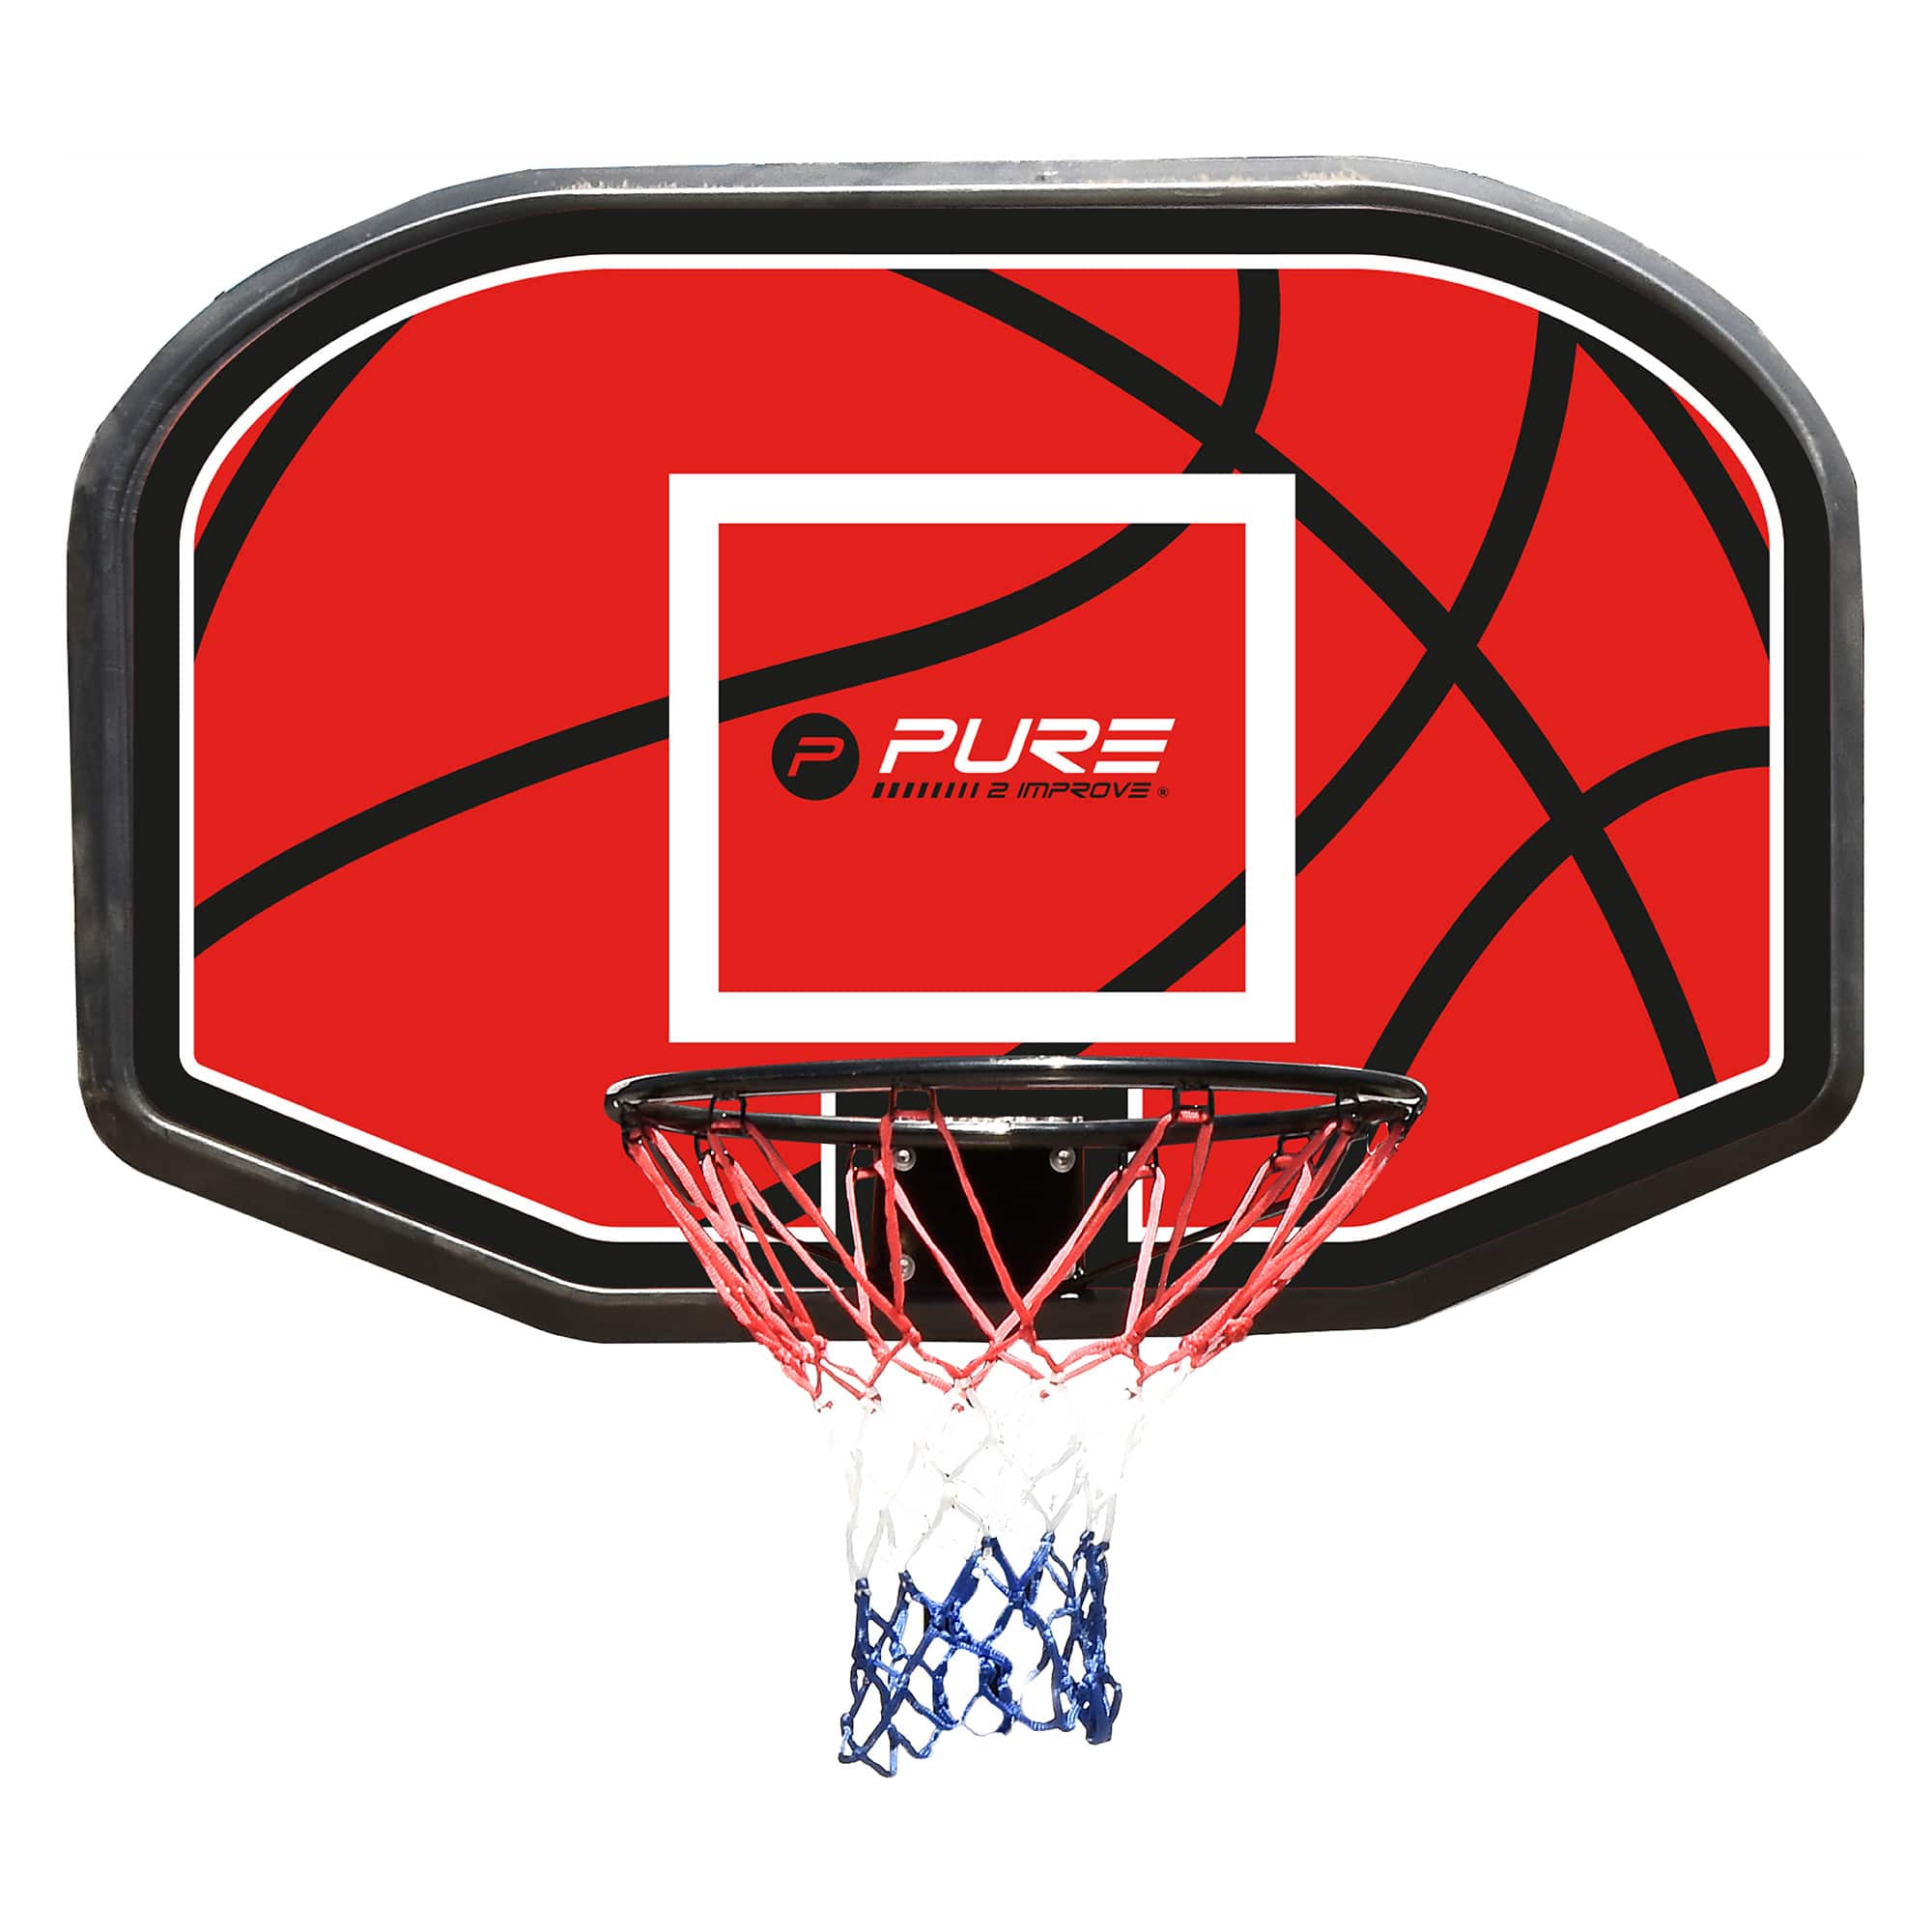 Coach board volleyball Pure2Improve - Training accessories - Club equipment  - Equipment